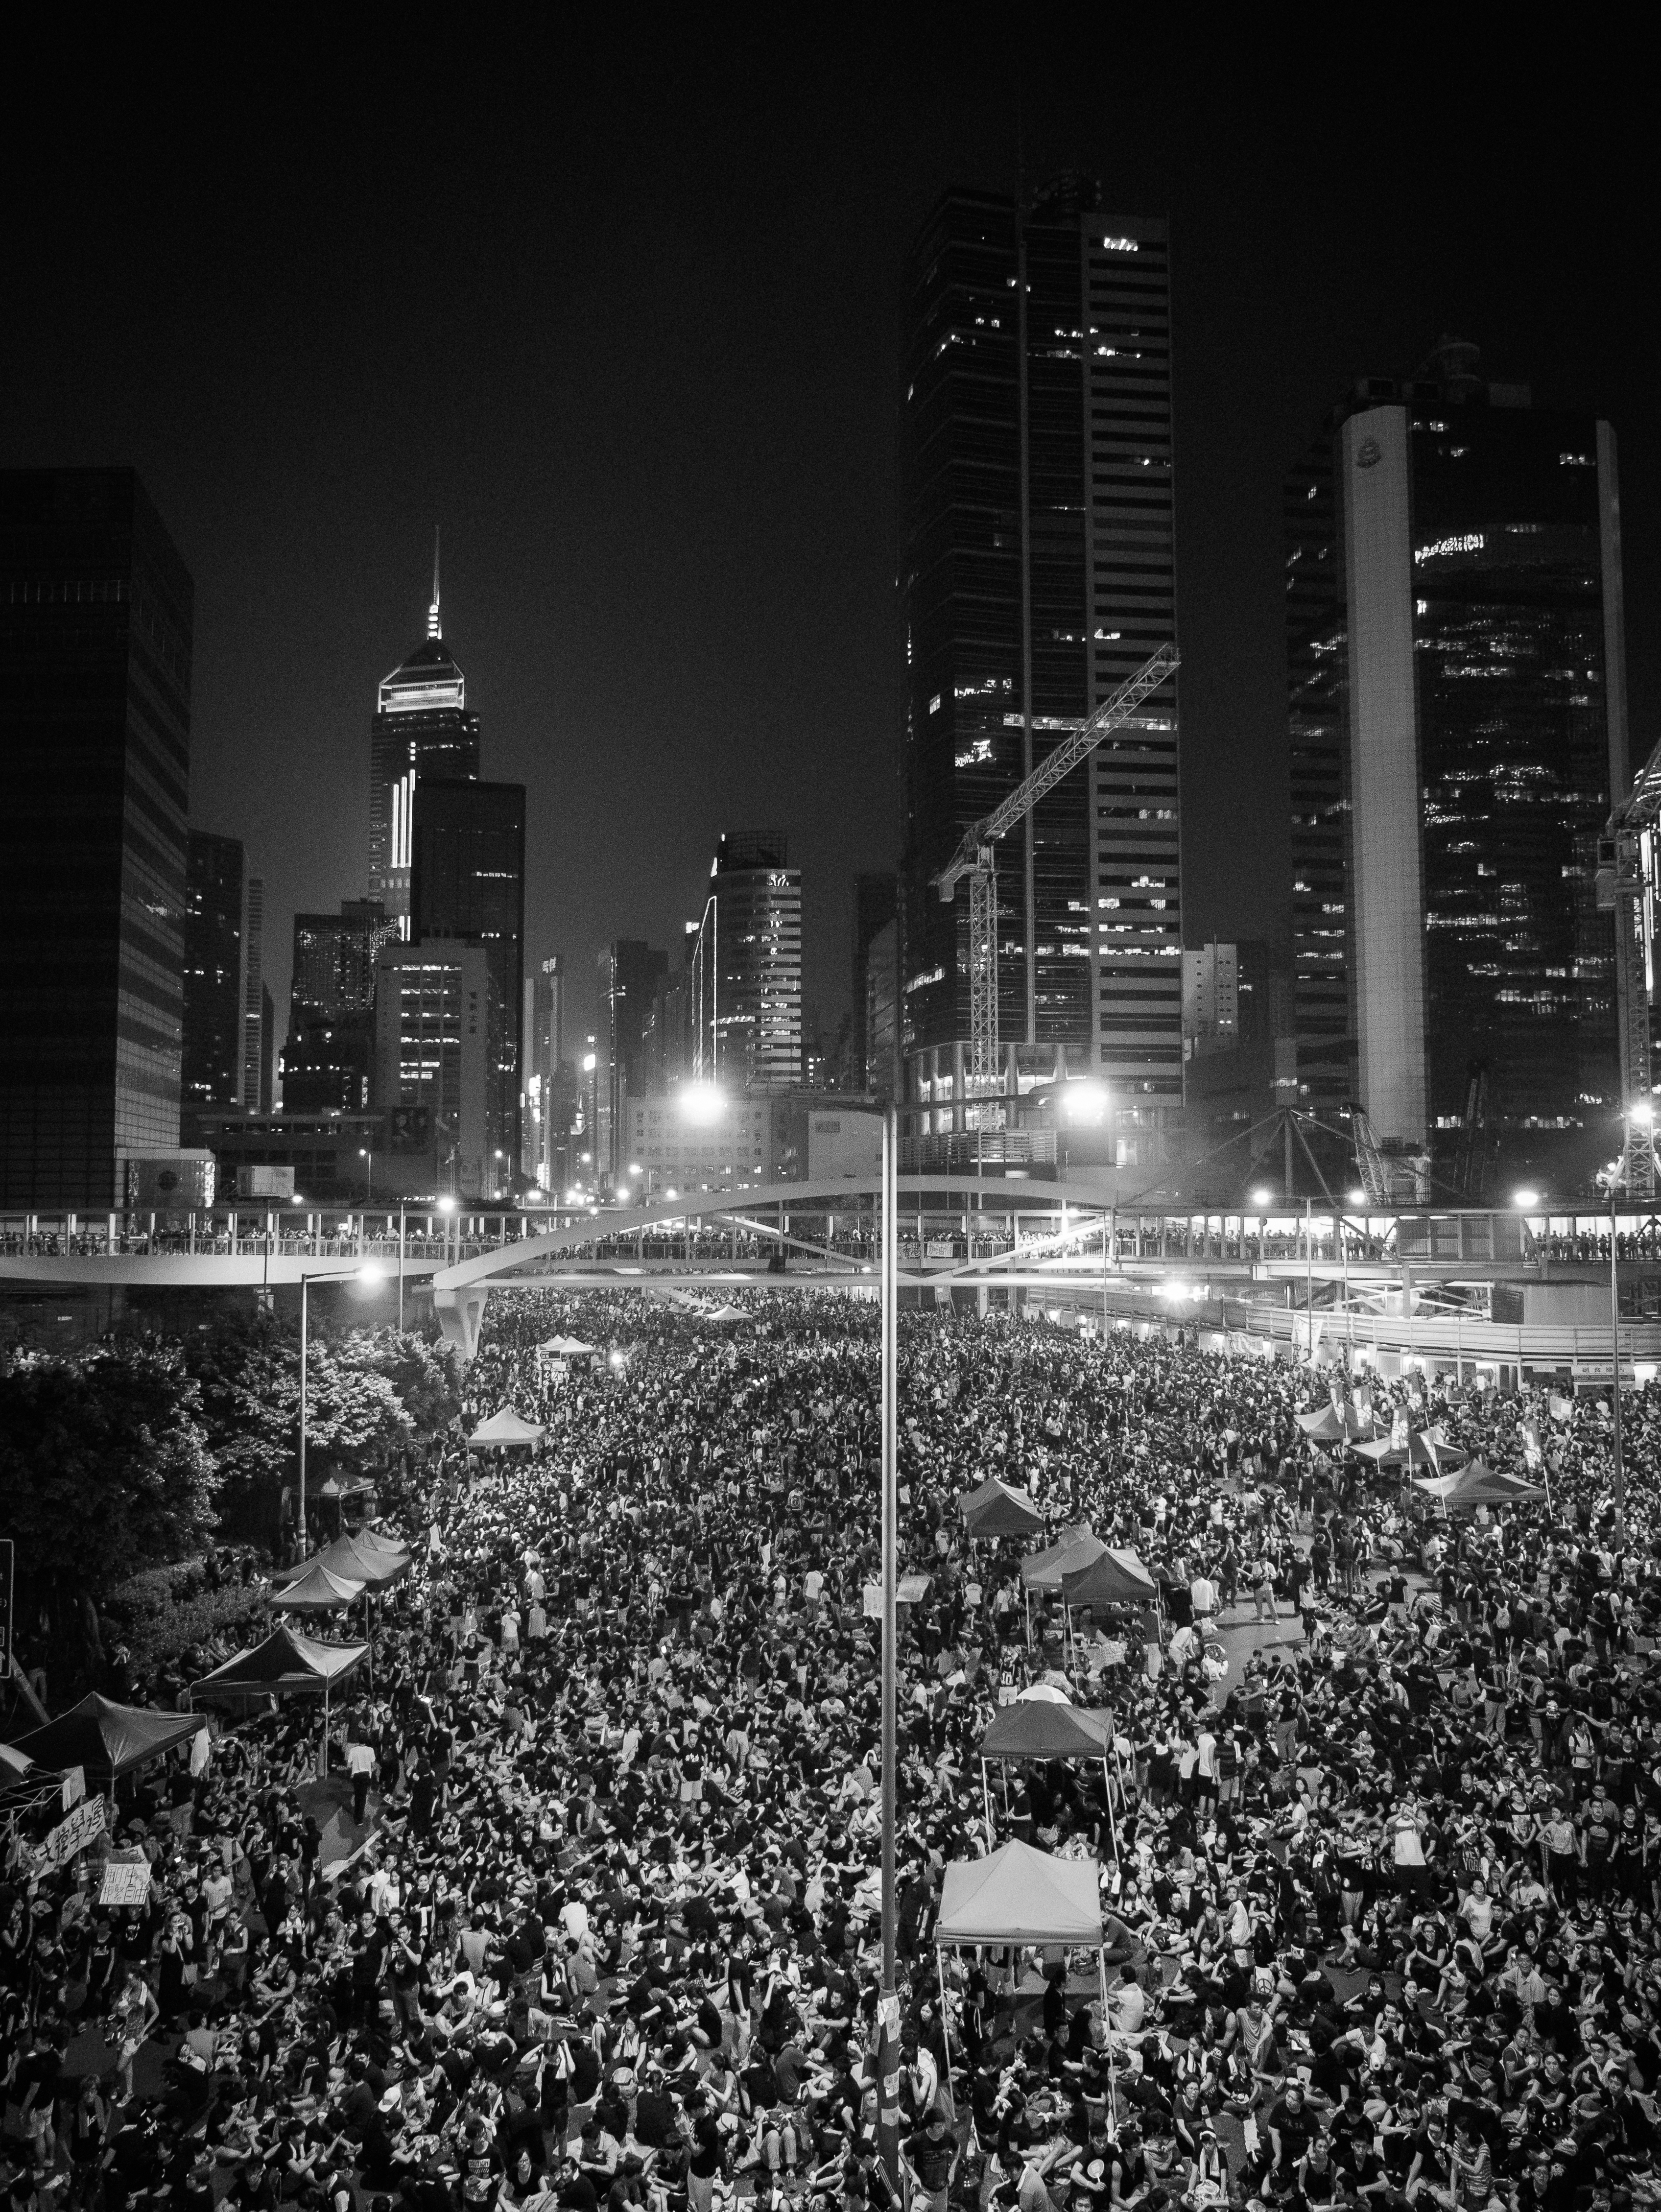 Hong Kong Umbrella Revolution -umbrellarevolution -umbrellamovement -gm1 -lumix -monochrome (15269984528)